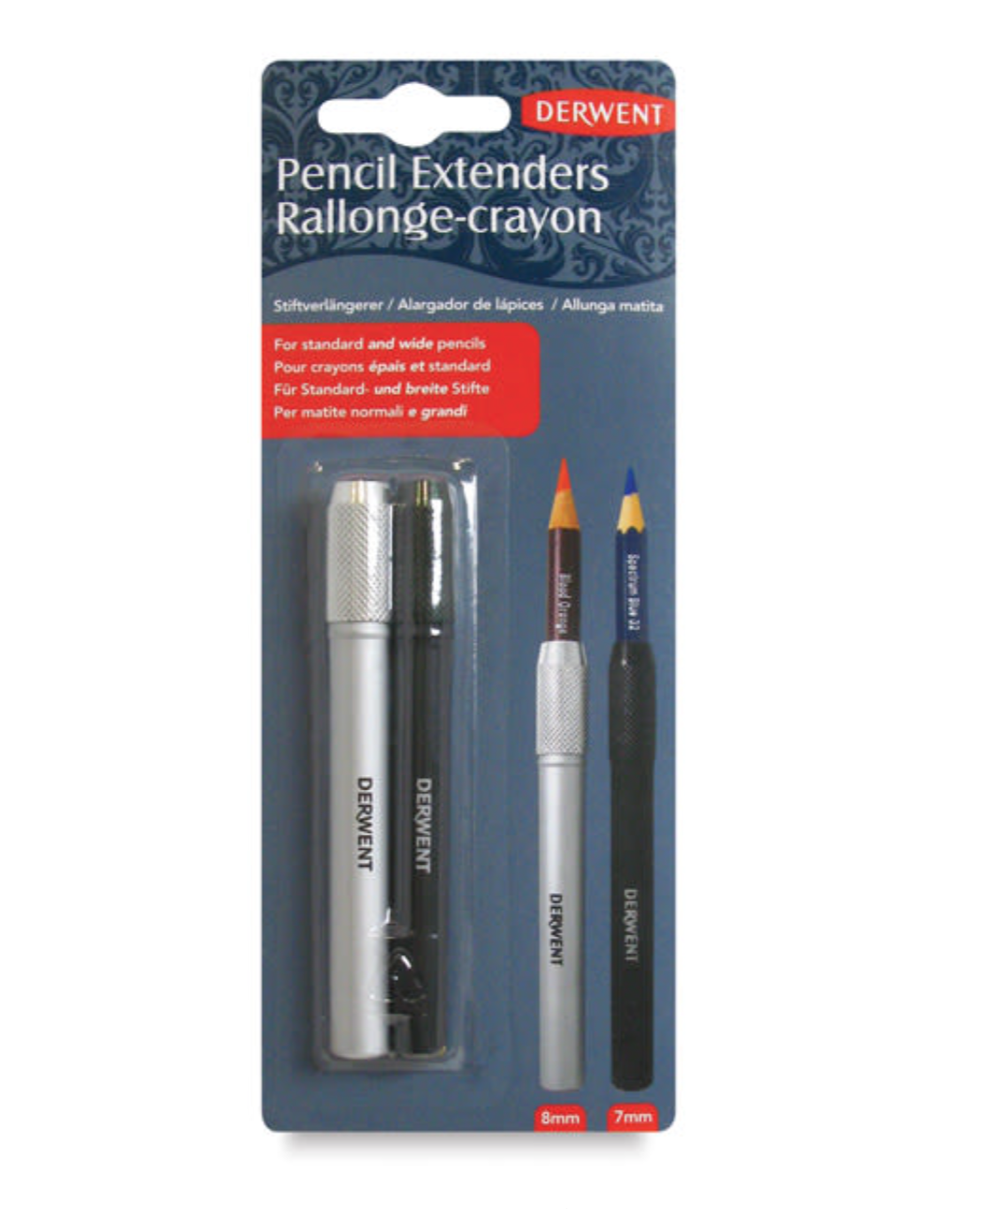 34. Derwent Pencil Extenders*